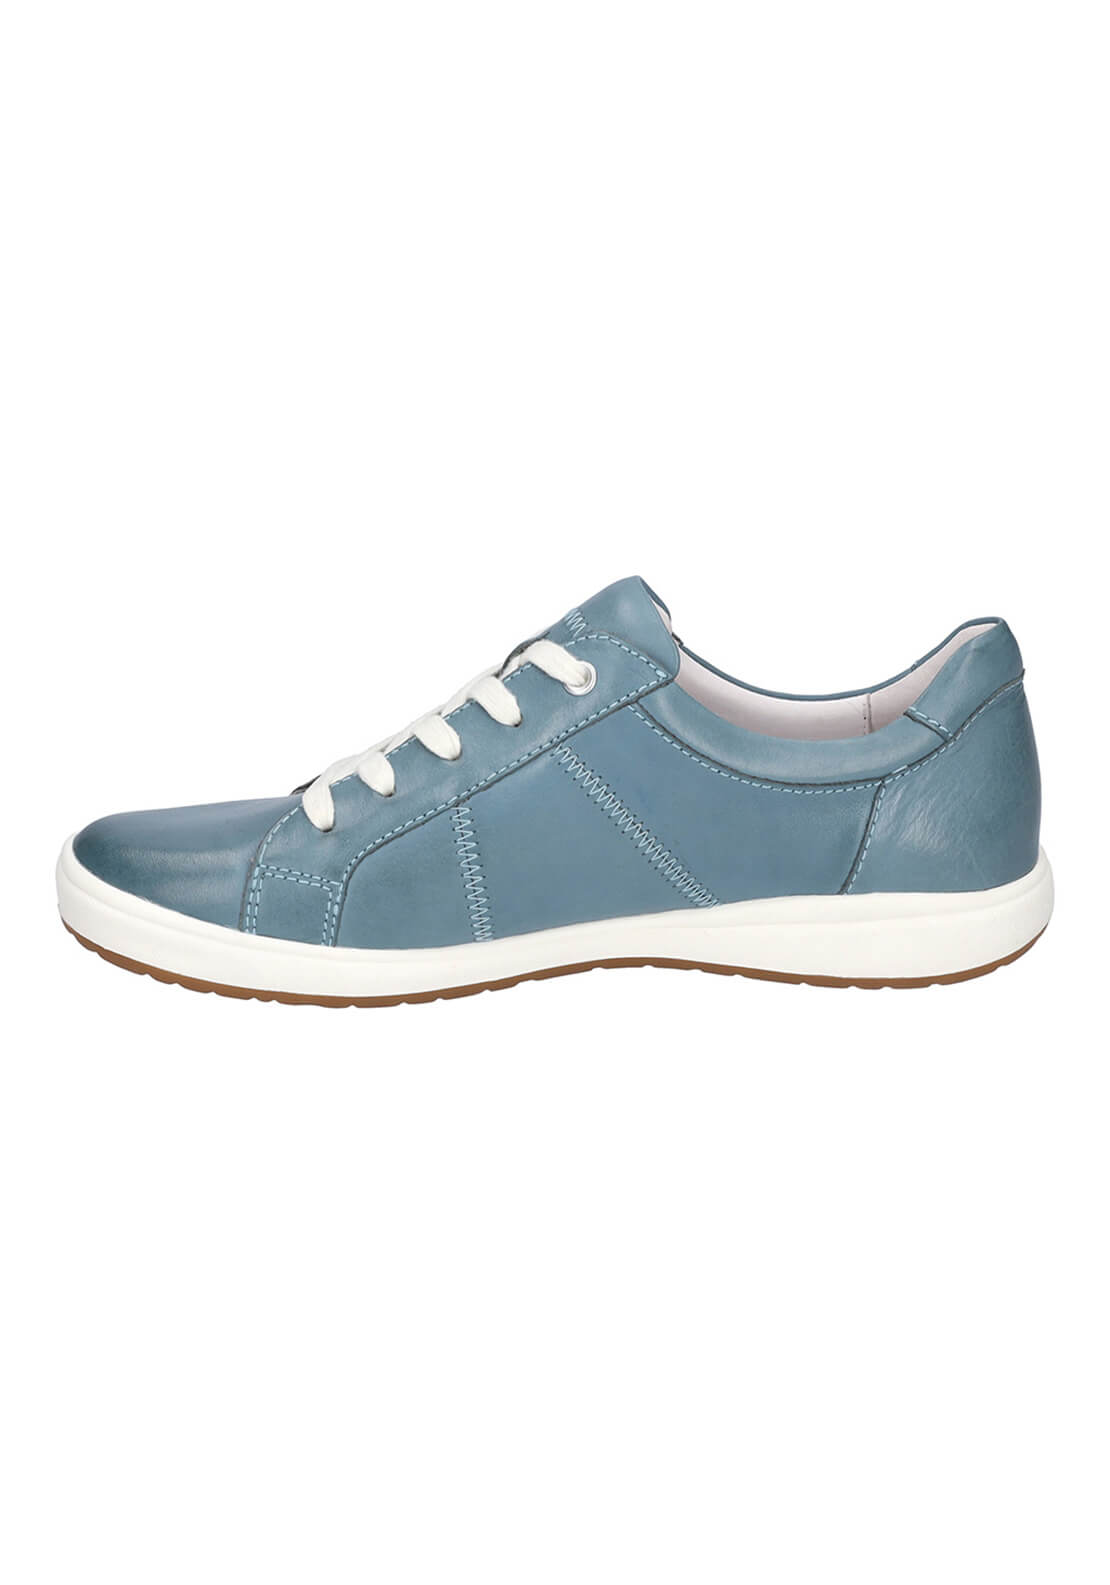 Josef Seibel Caren 01 Shoes - Blue 7 Shaws Department Stores